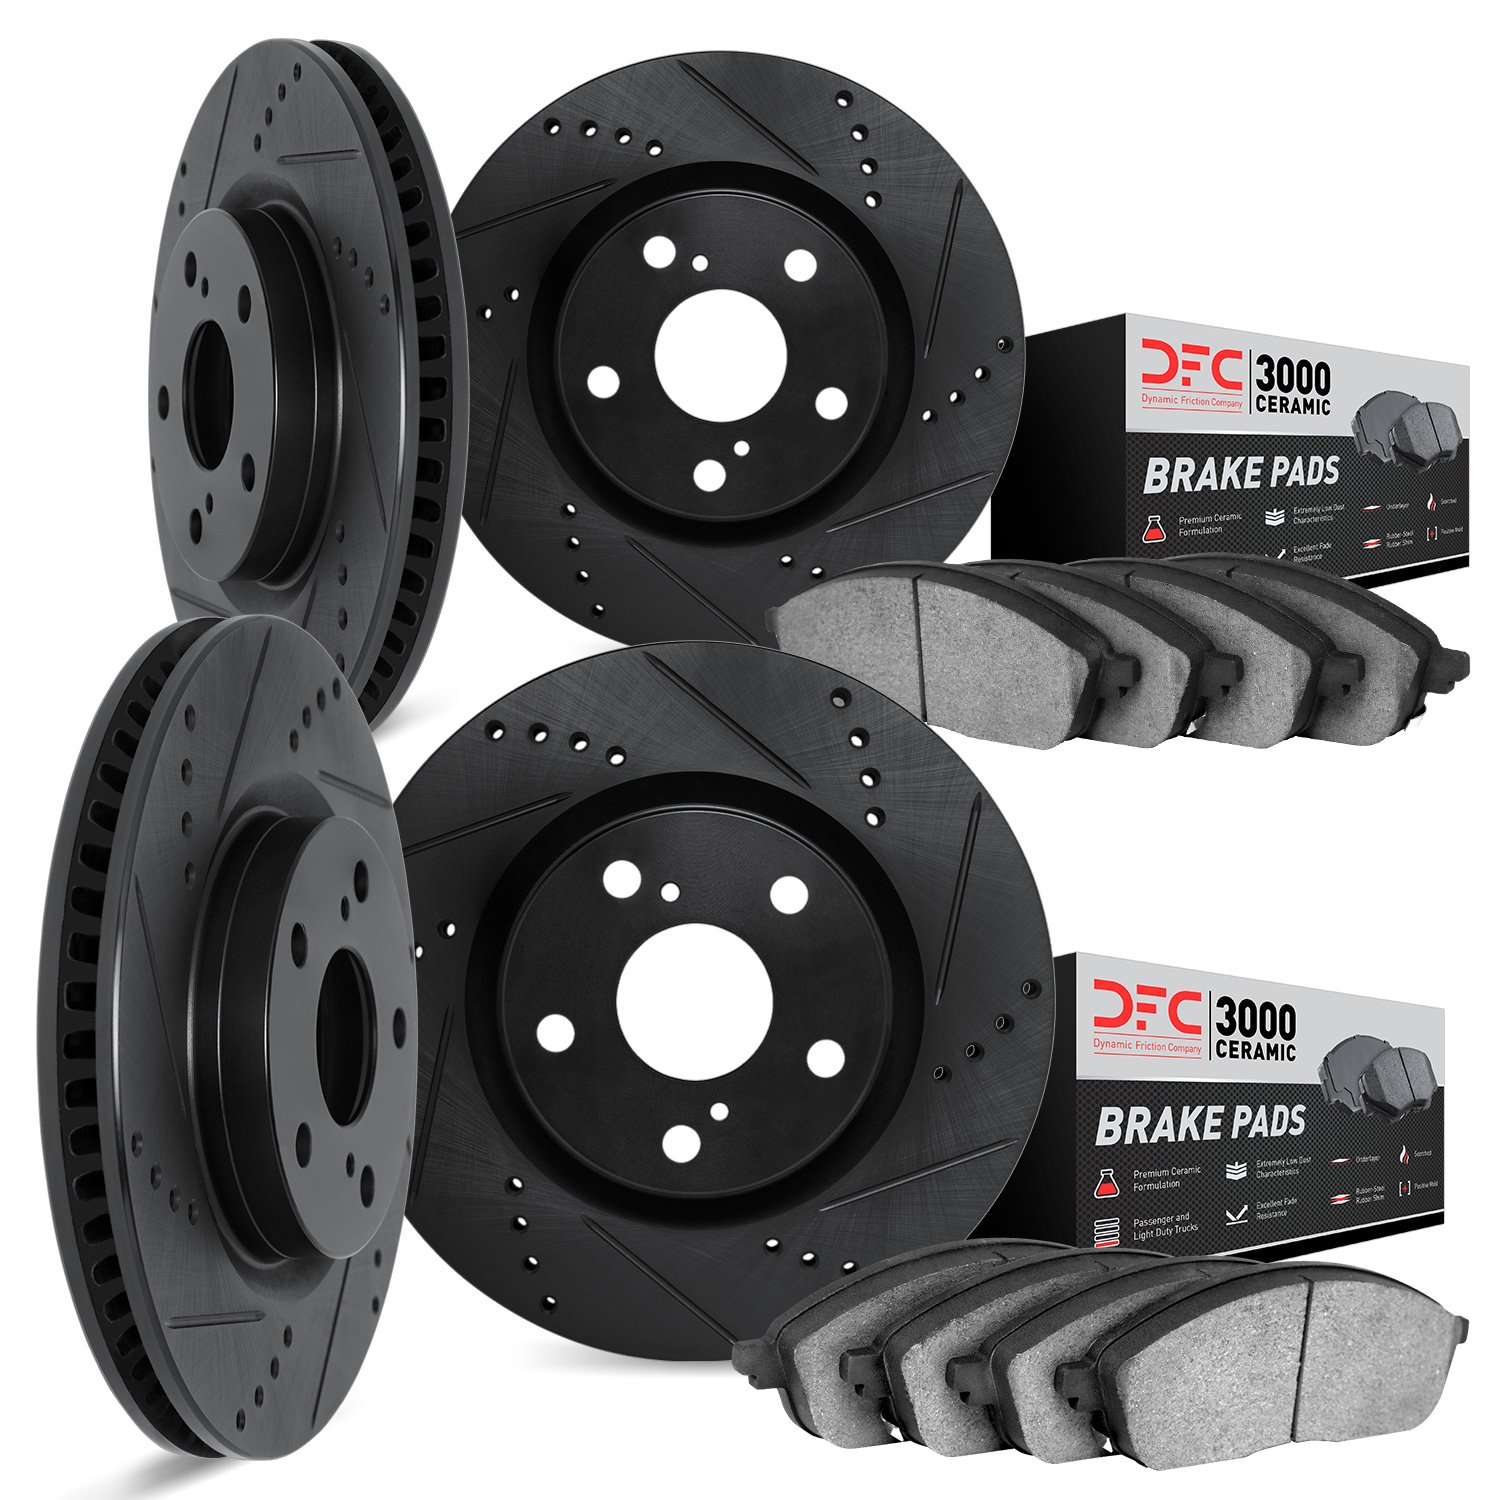 8304-54090 Drilled/Slotted Brake Rotors with 3000-Series Ceramic Brake Pads Kit [Black], 2011-2014 Ford/Lincoln/Mercury/Mazda, P